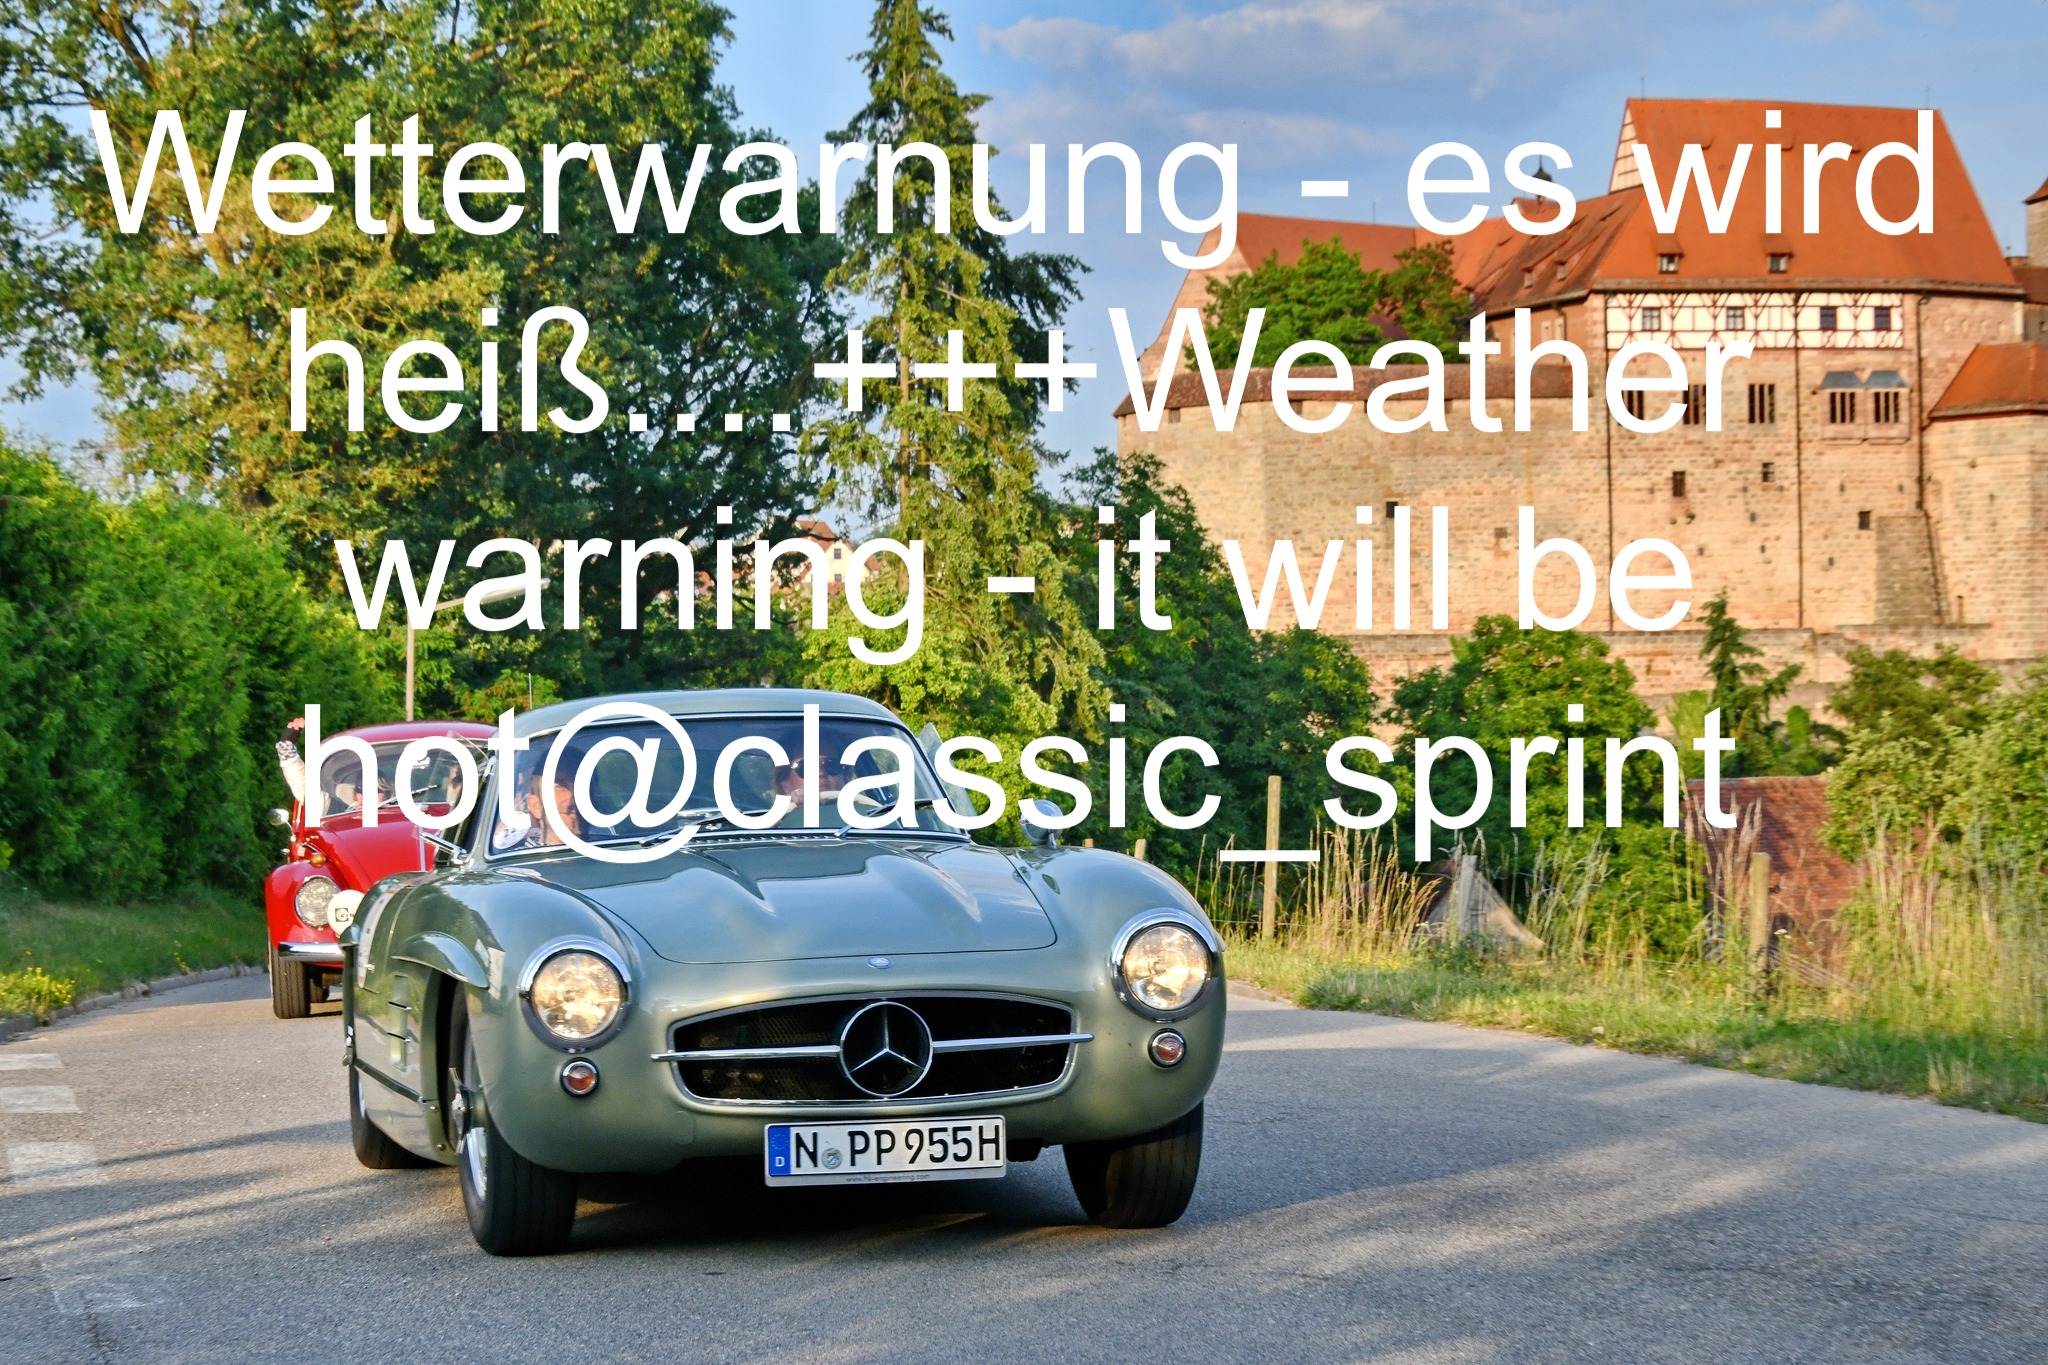 www.classic-sprint.de | 21.-23.06.2024Wetterwarnung Classic Sprint. Bitte gewöhnt euch nicht an das schlechte Wetter gerade. Zum Classic Sprint wird es heiß und schön. +++Weather warning for the Classic Sprint. Please don't get used to the bad weather right now. It will be hot and beautiful for the Classic Sprint.<a href="https://www.instagram.com/explore/tags/classic/" target="_blank">#classic</a> <a href="https://www.instagram.com/explore/tags/classiccar/" target="_blank">#classiccar</a> <a href="https://www.instagram.com/explore/tags/gullwing/" target="_blank">#gullwing</a> <a href="https://www.instagram.com/explore/tags/race/" target="_blank">#race</a> <a href="https://www.instagram.com/myvalor_mein_edelmetall/" target="_blank">@myvalor_mein_edelmetall</a> <a href="https://www.instagram.com/trisor/" target="_blank">@trisor</a>.de <a href="https://www.instagram.com/laemmermann/" target="_blank">@laemmermann</a>.insektenschutz <a href="https://www.instagram.com/Hiscox/" target="_blank">@Hiscox</a> Classic Cars